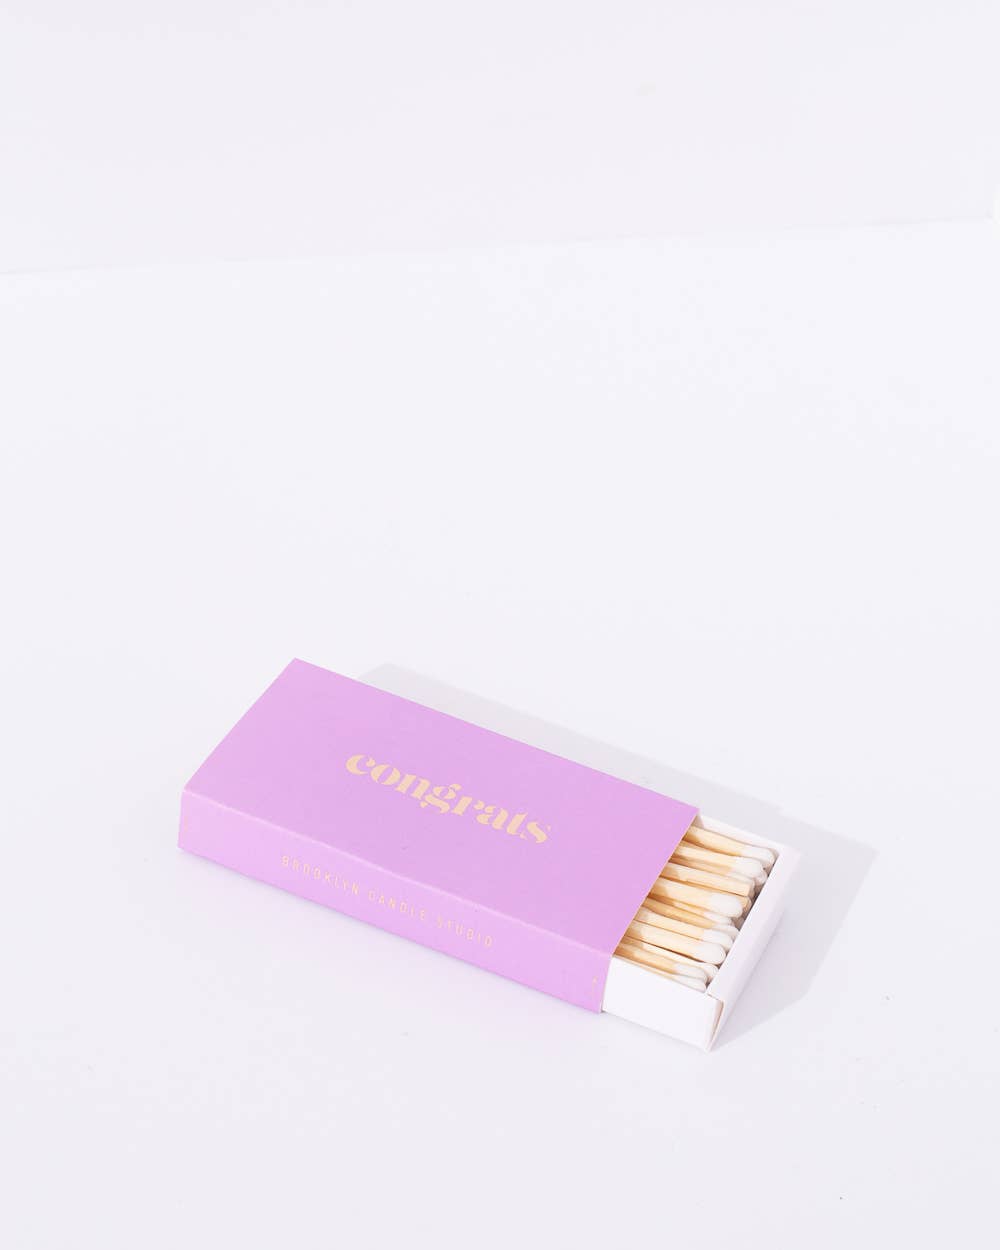 XL Statement Matches | Congrats/Lilac | Brooklyn Candle Studio